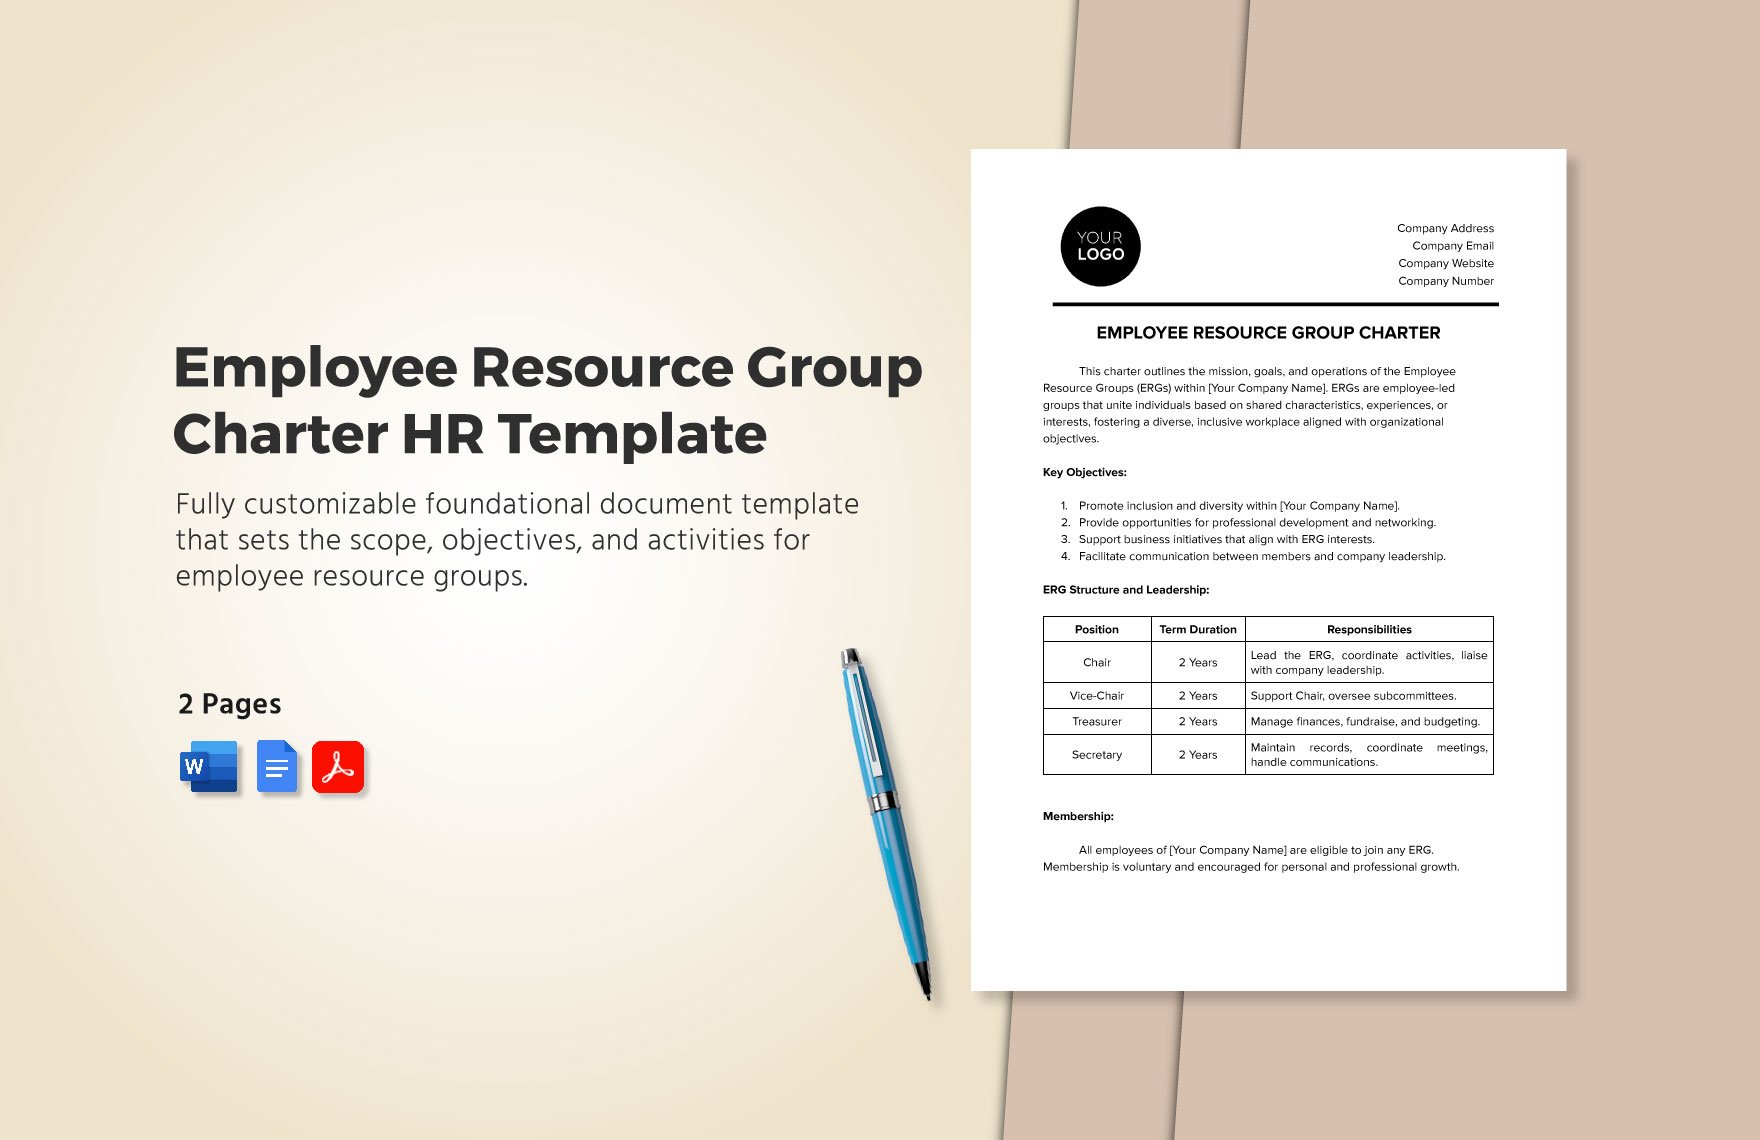 Employee Resource Group Charter HR Template